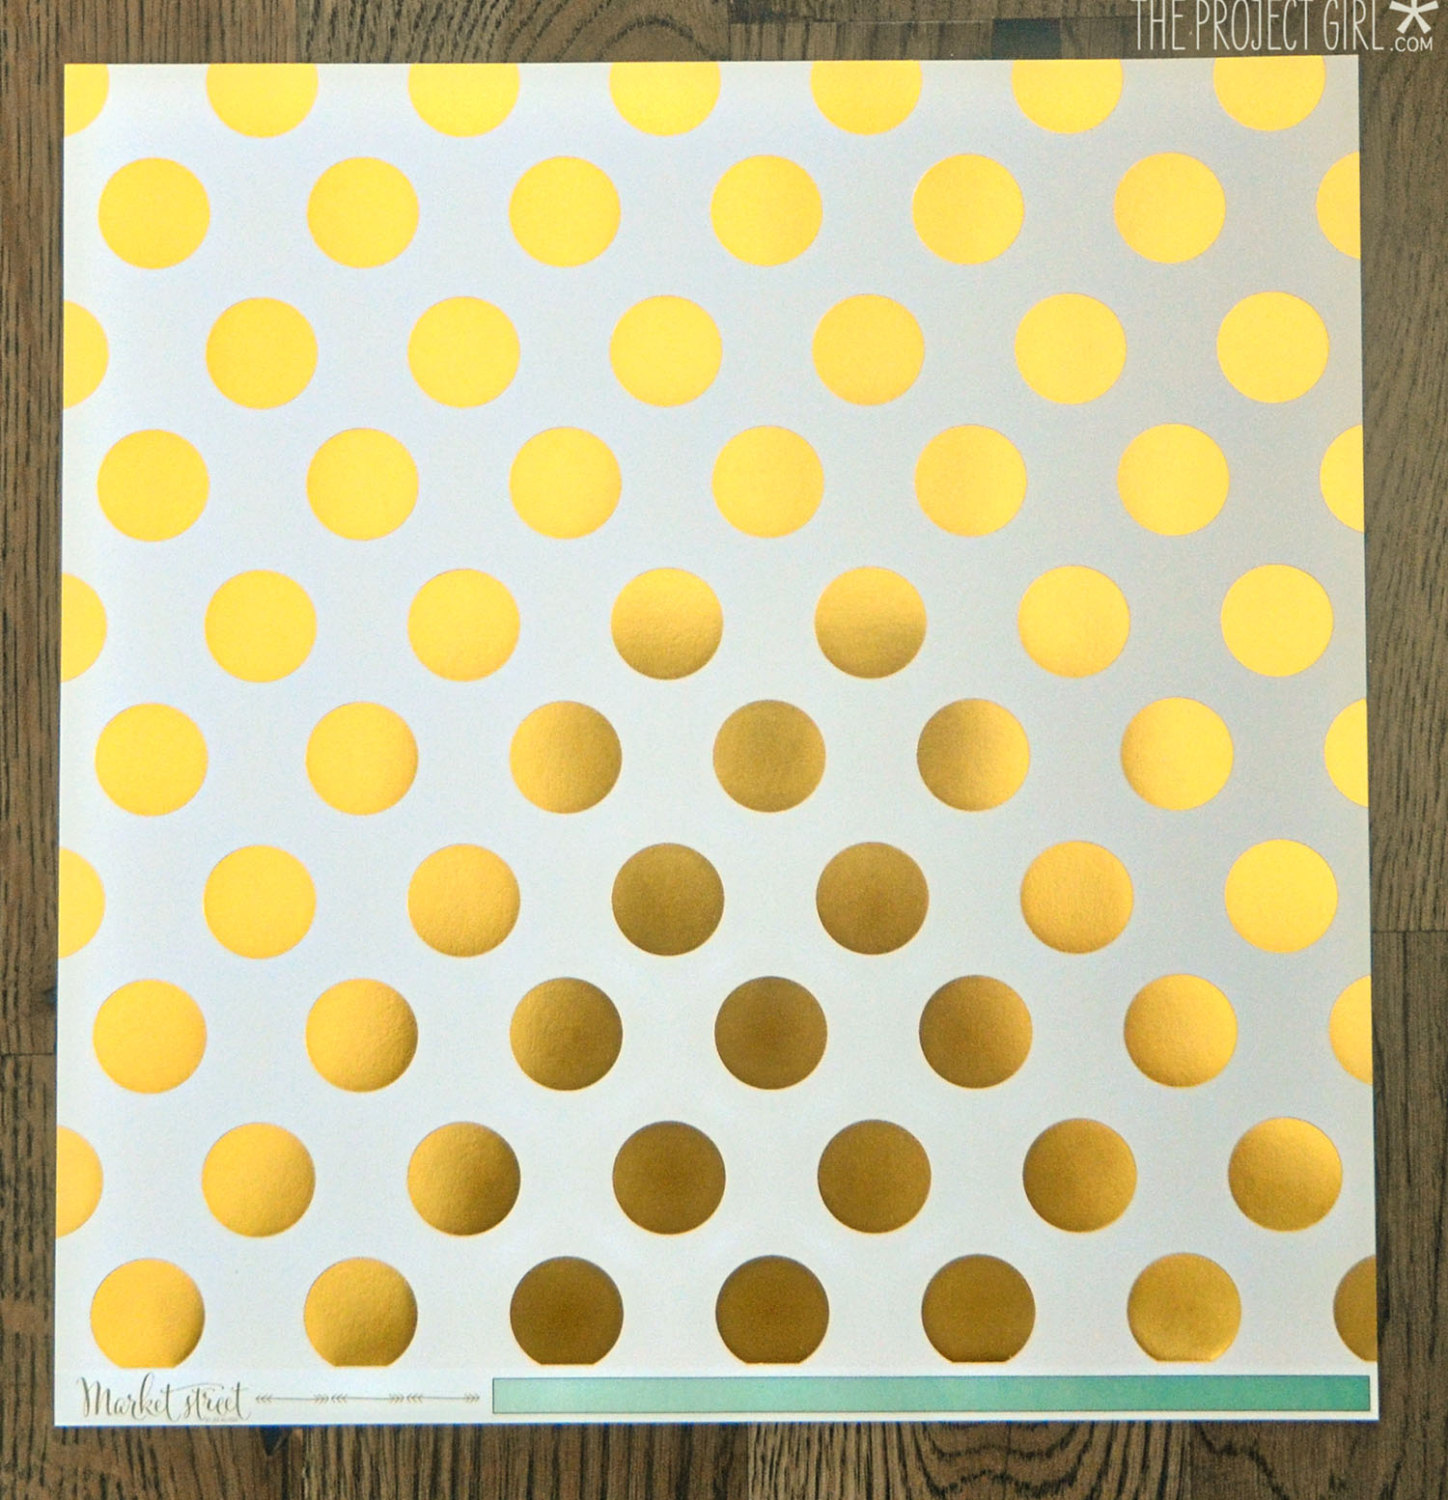 Metallic Gold Polka Dot Background Sheets Foil